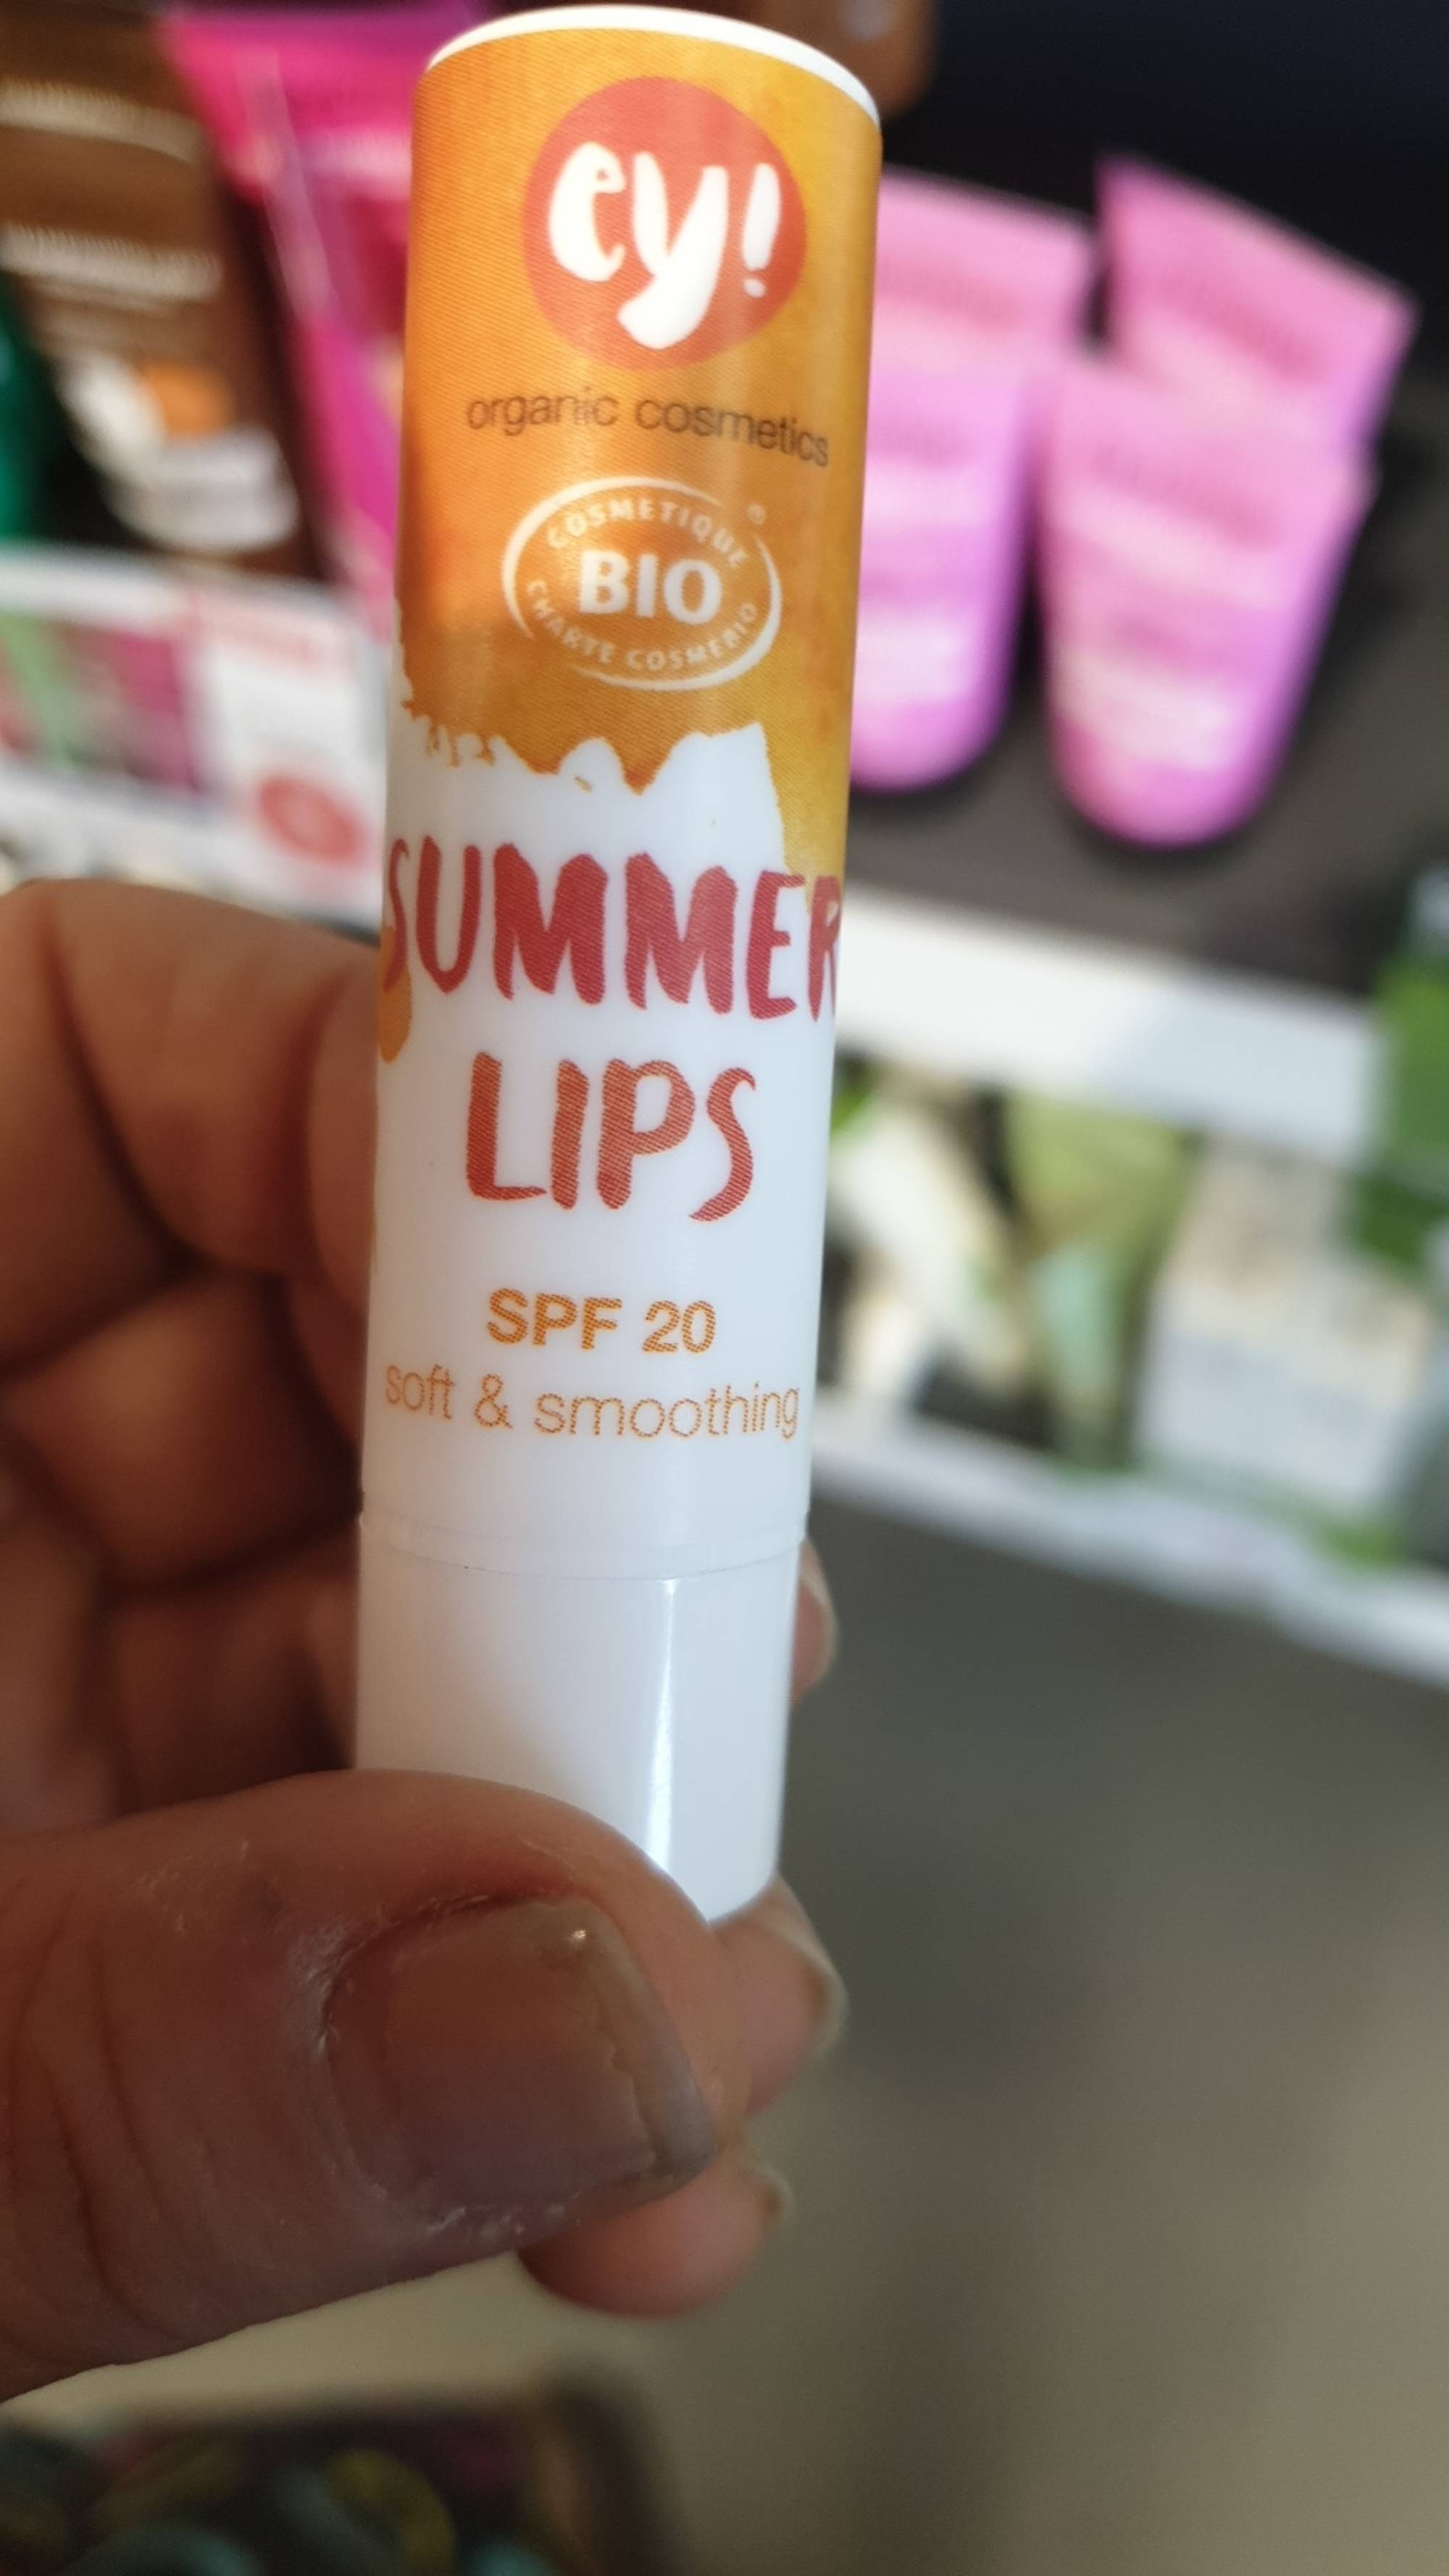 ECO COSMETICS - Ey ! Organic cosmetics - Summer lips SPF 20